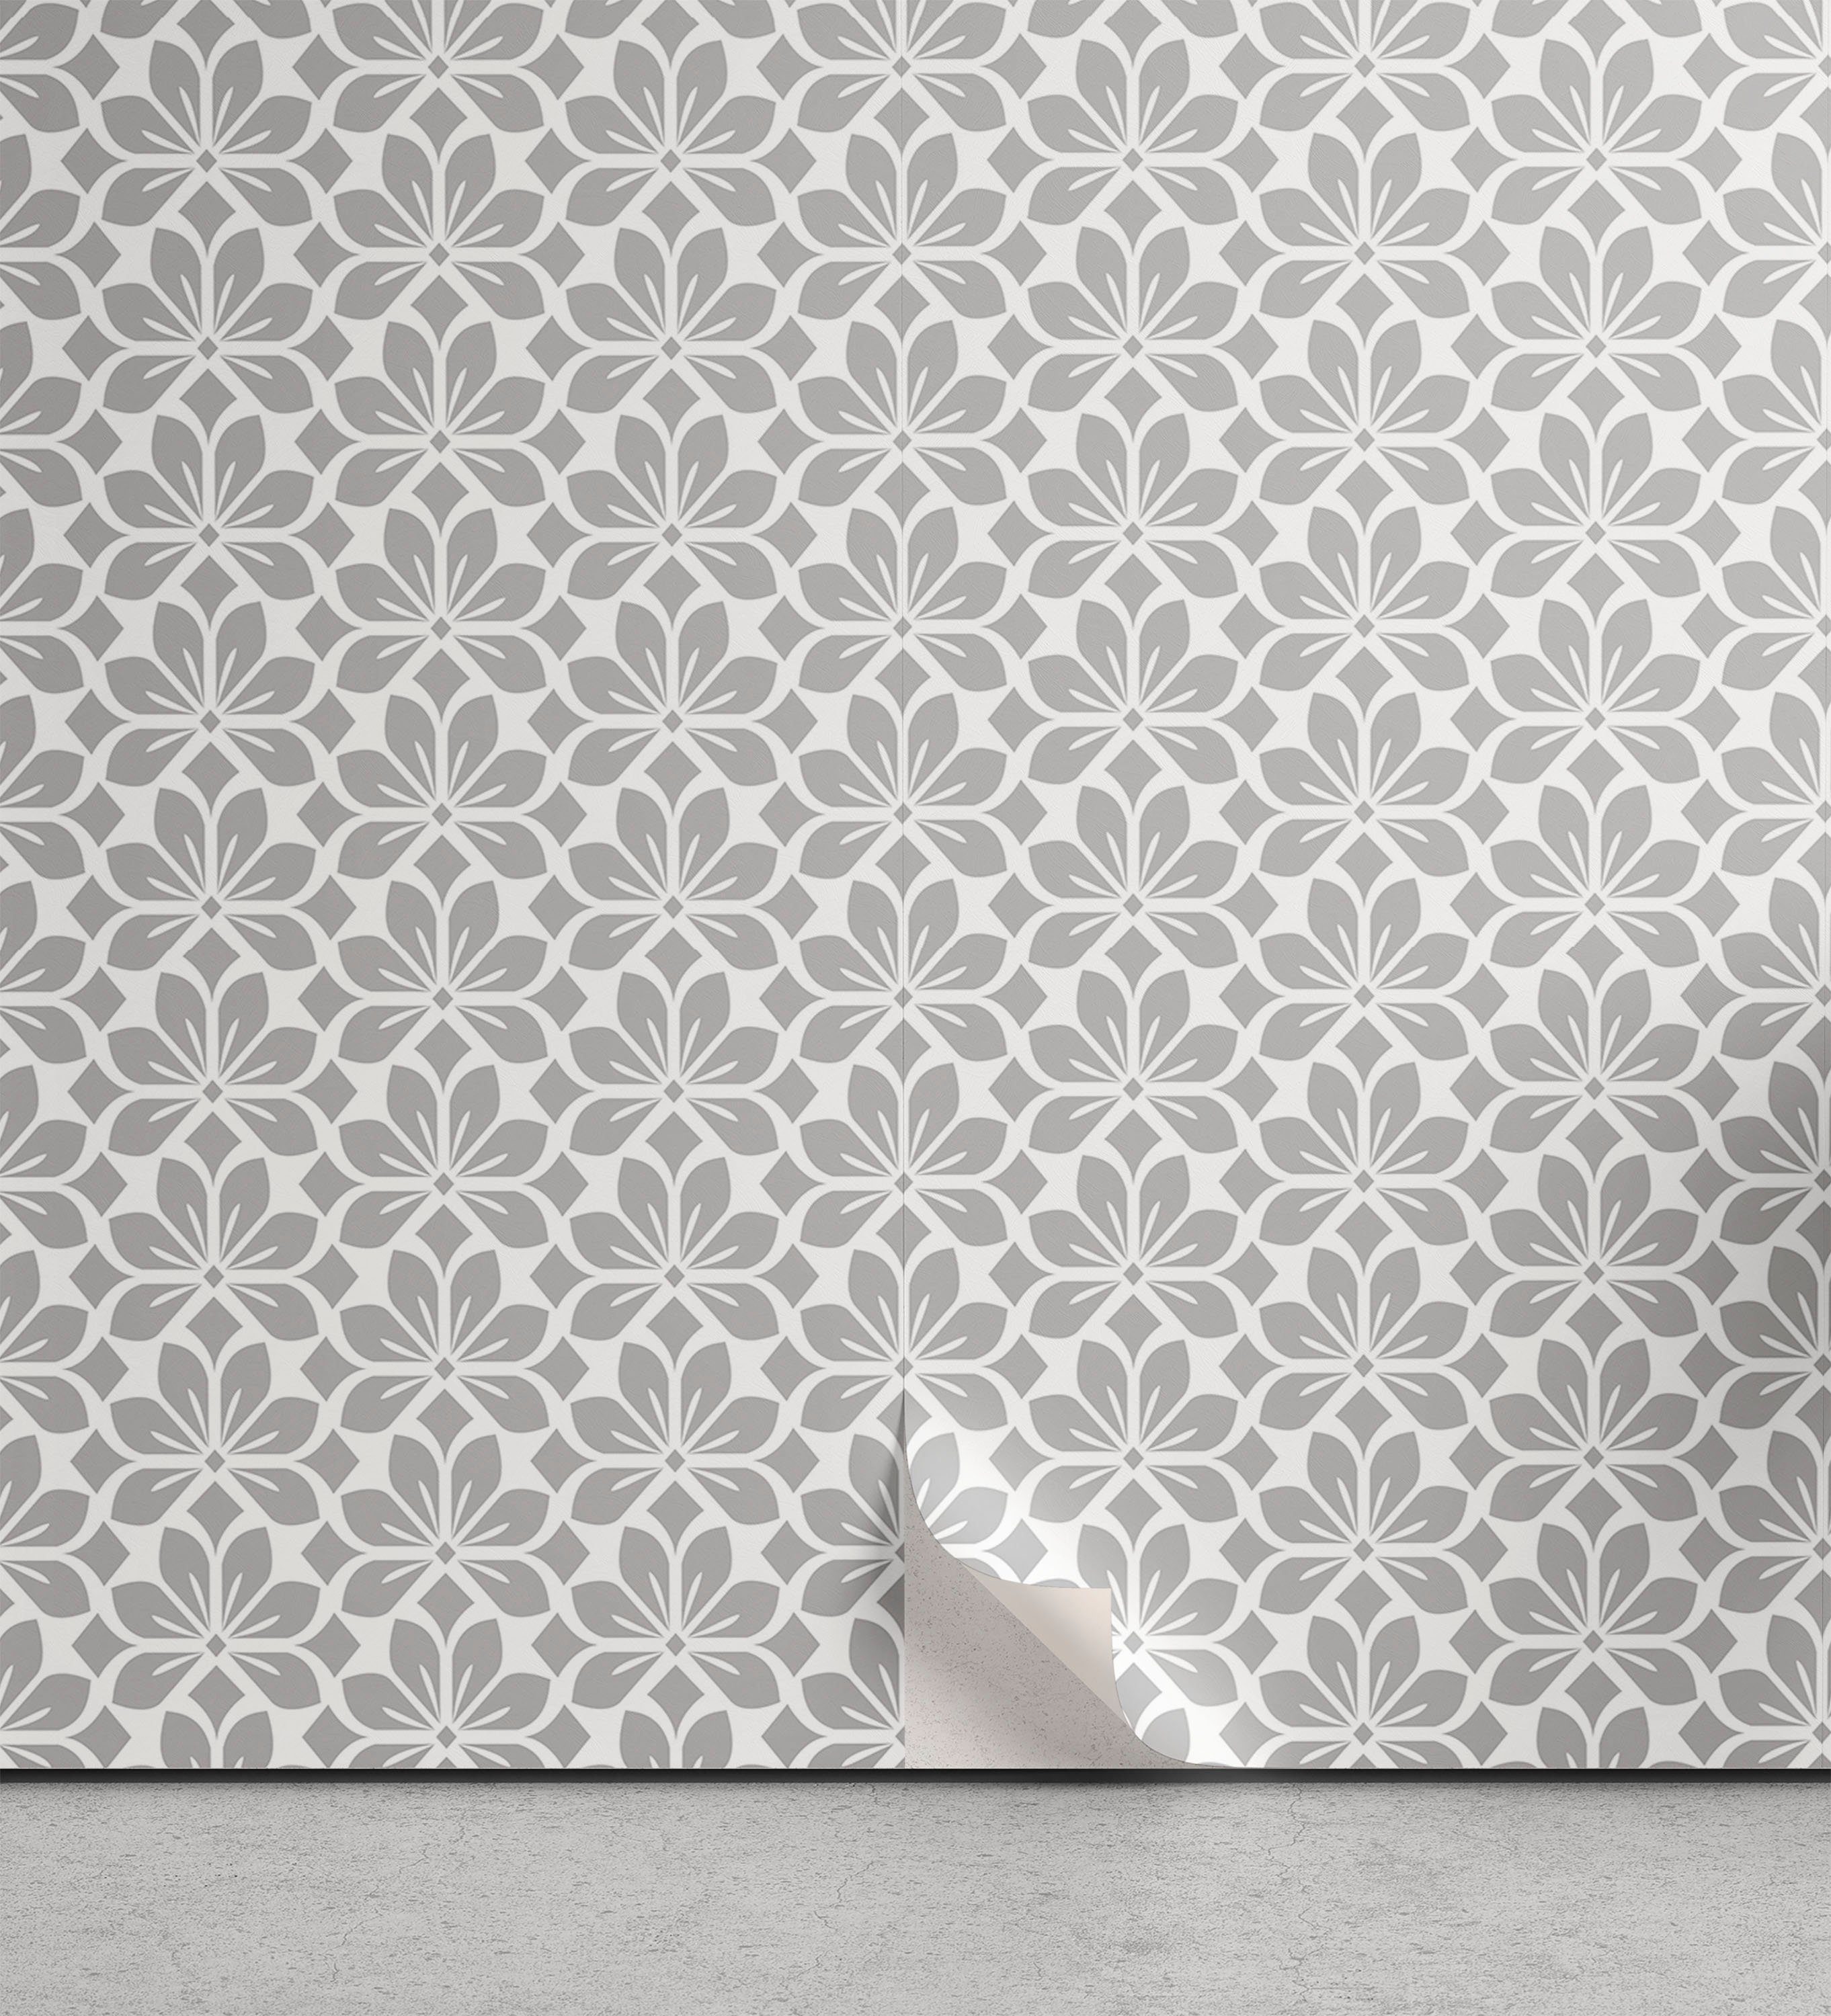 Abakuhaus Vinyltapete selbstklebendes Motive Blumen Abstrakt Wohnzimmer inspirierte Küchenakzent